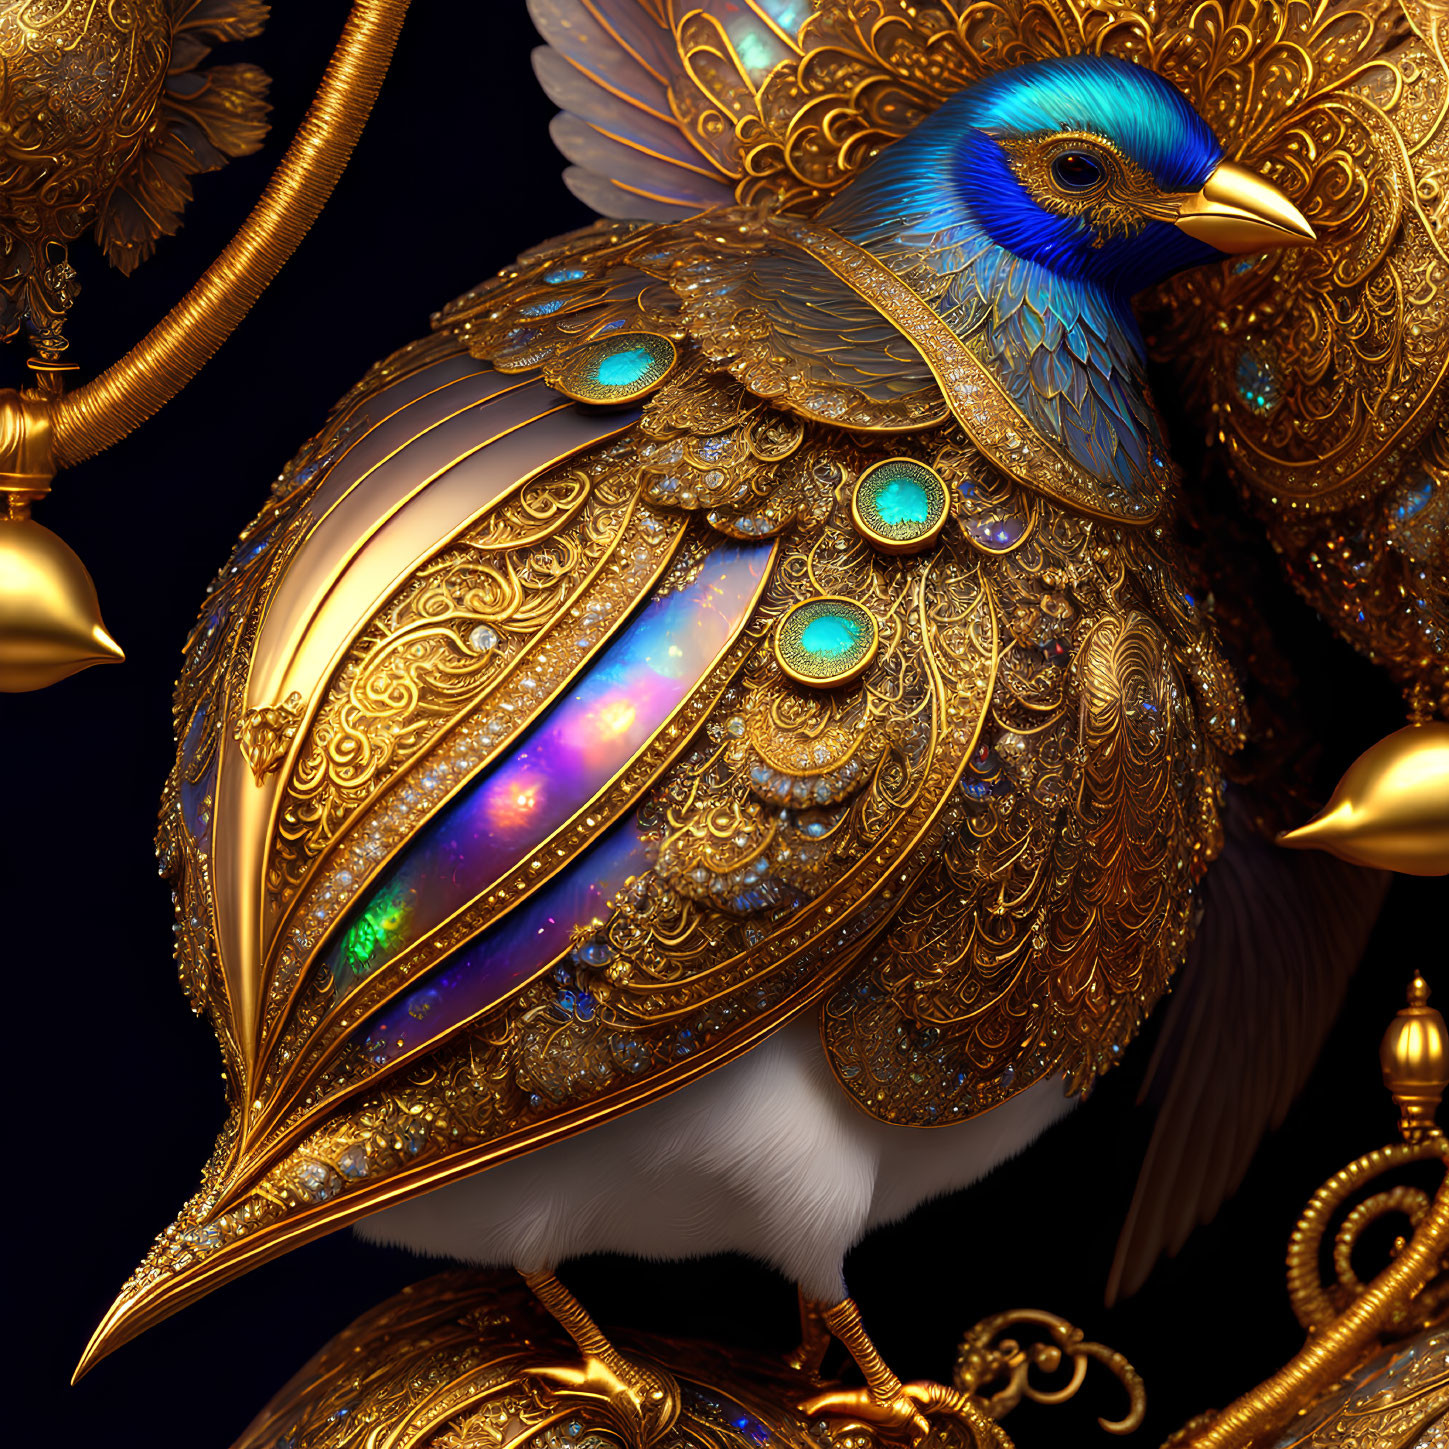 Digital Artwork: Bird with Golden Jeweled Wings on Dark Background